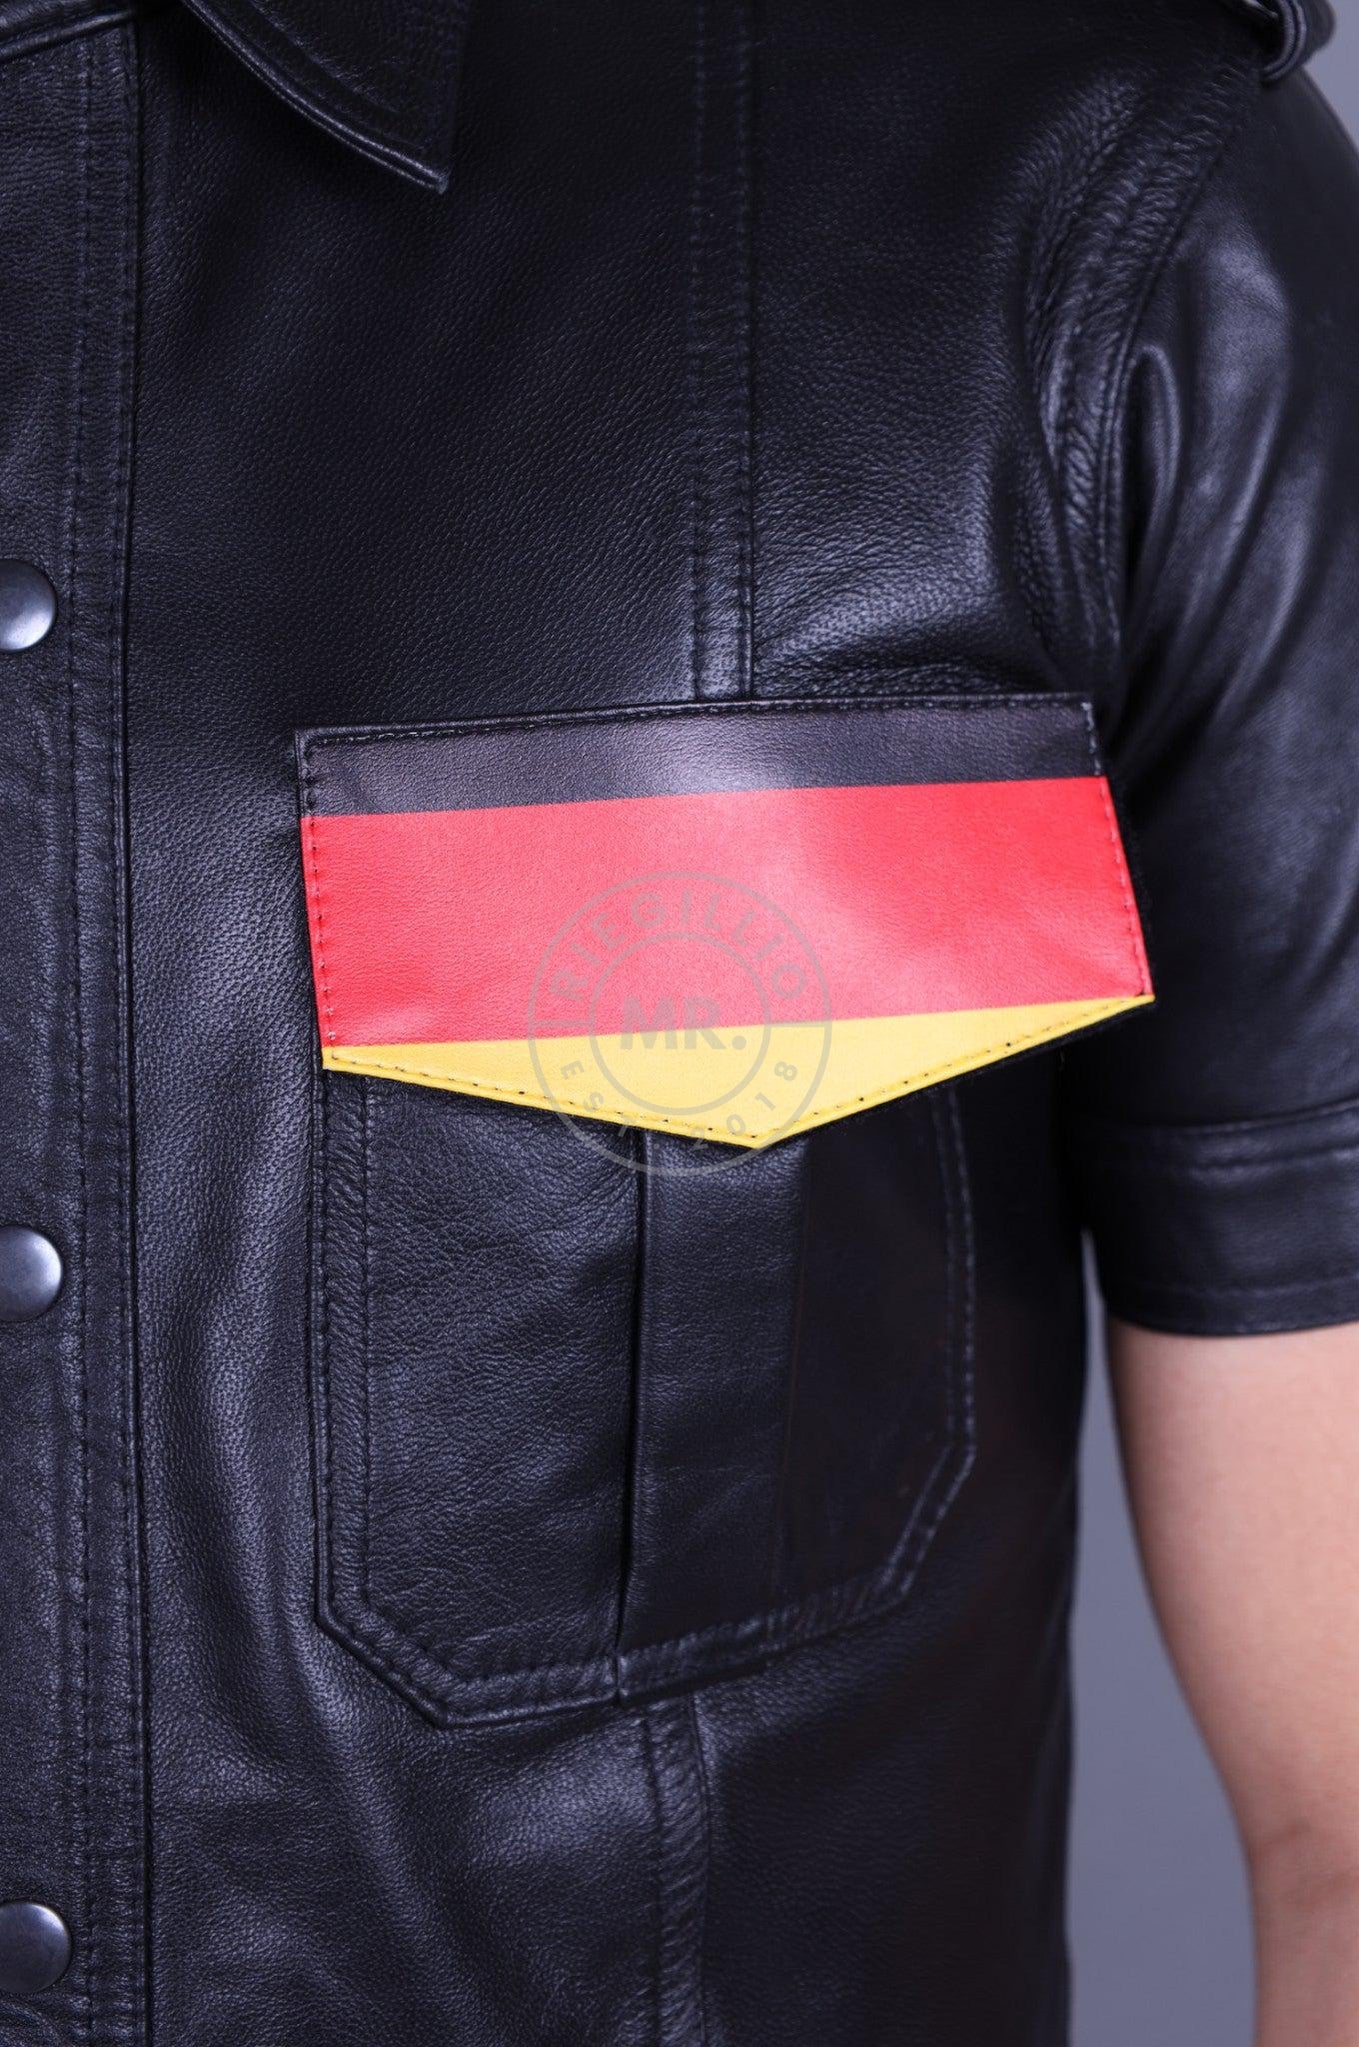 Velcro Patch - German Flag at MR. Riegillio